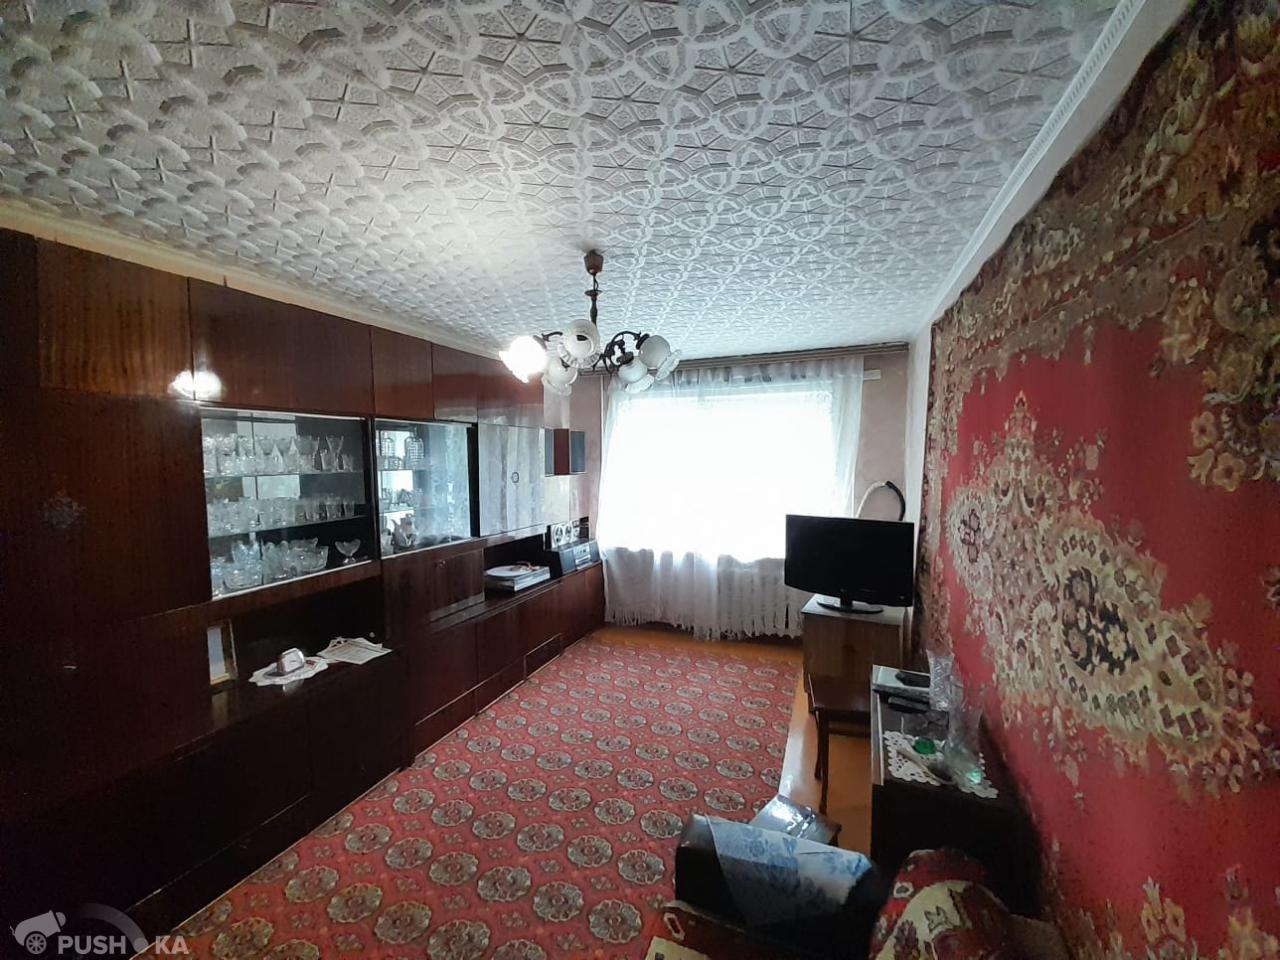 Продаётся 2-комнатная квартира 45.0 кв.м. этаж 3/5 за 2 100 000 руб 